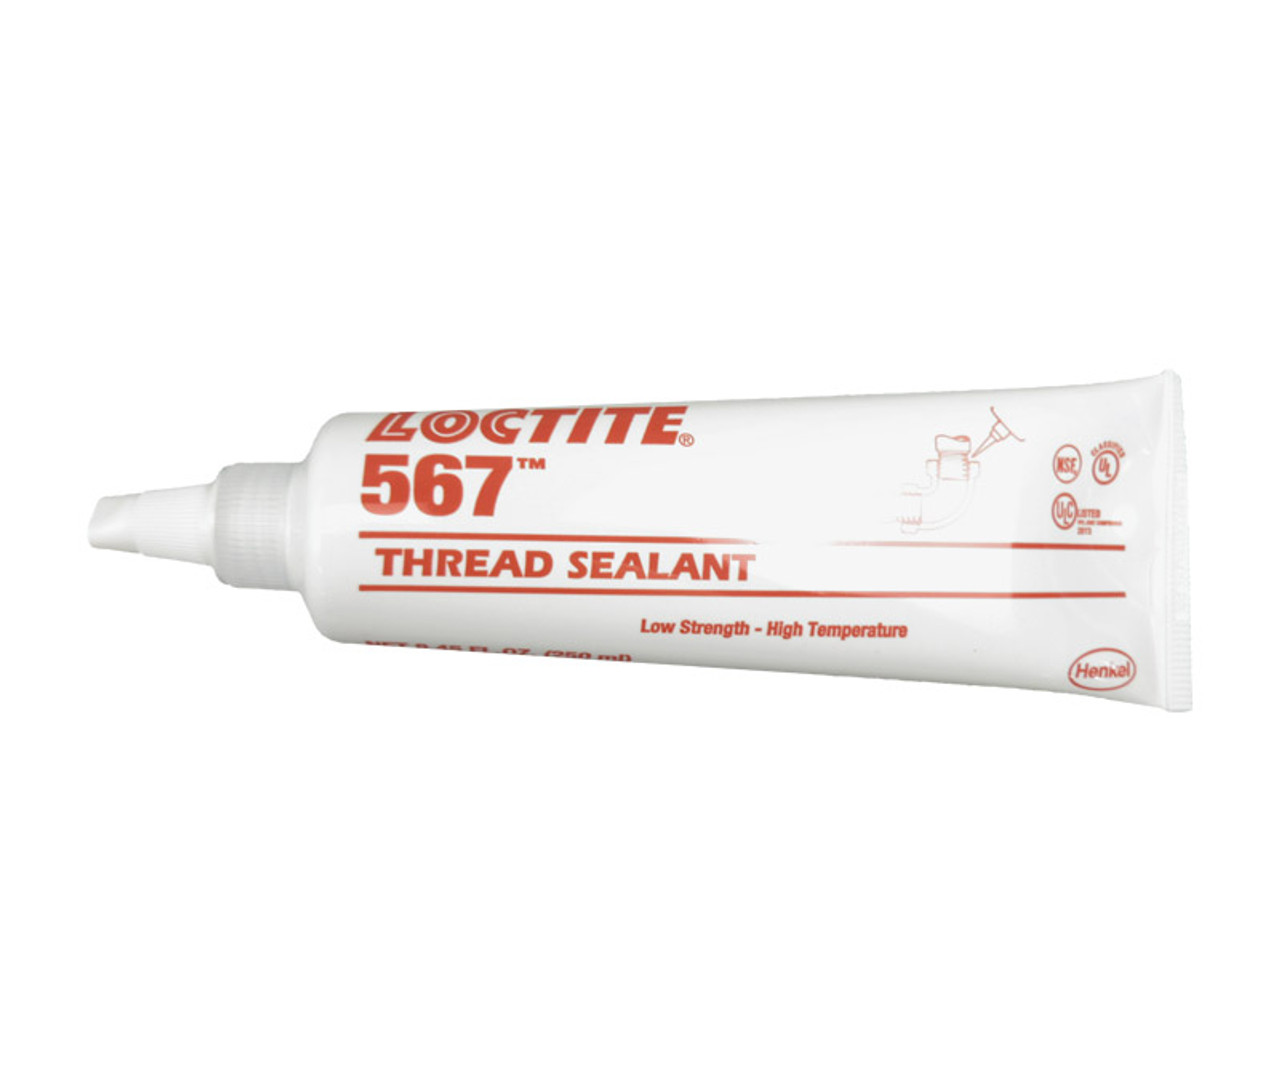 AccuAir Suspension Loctite 565 Anaerobic Thread Sealant - 6ml Tube